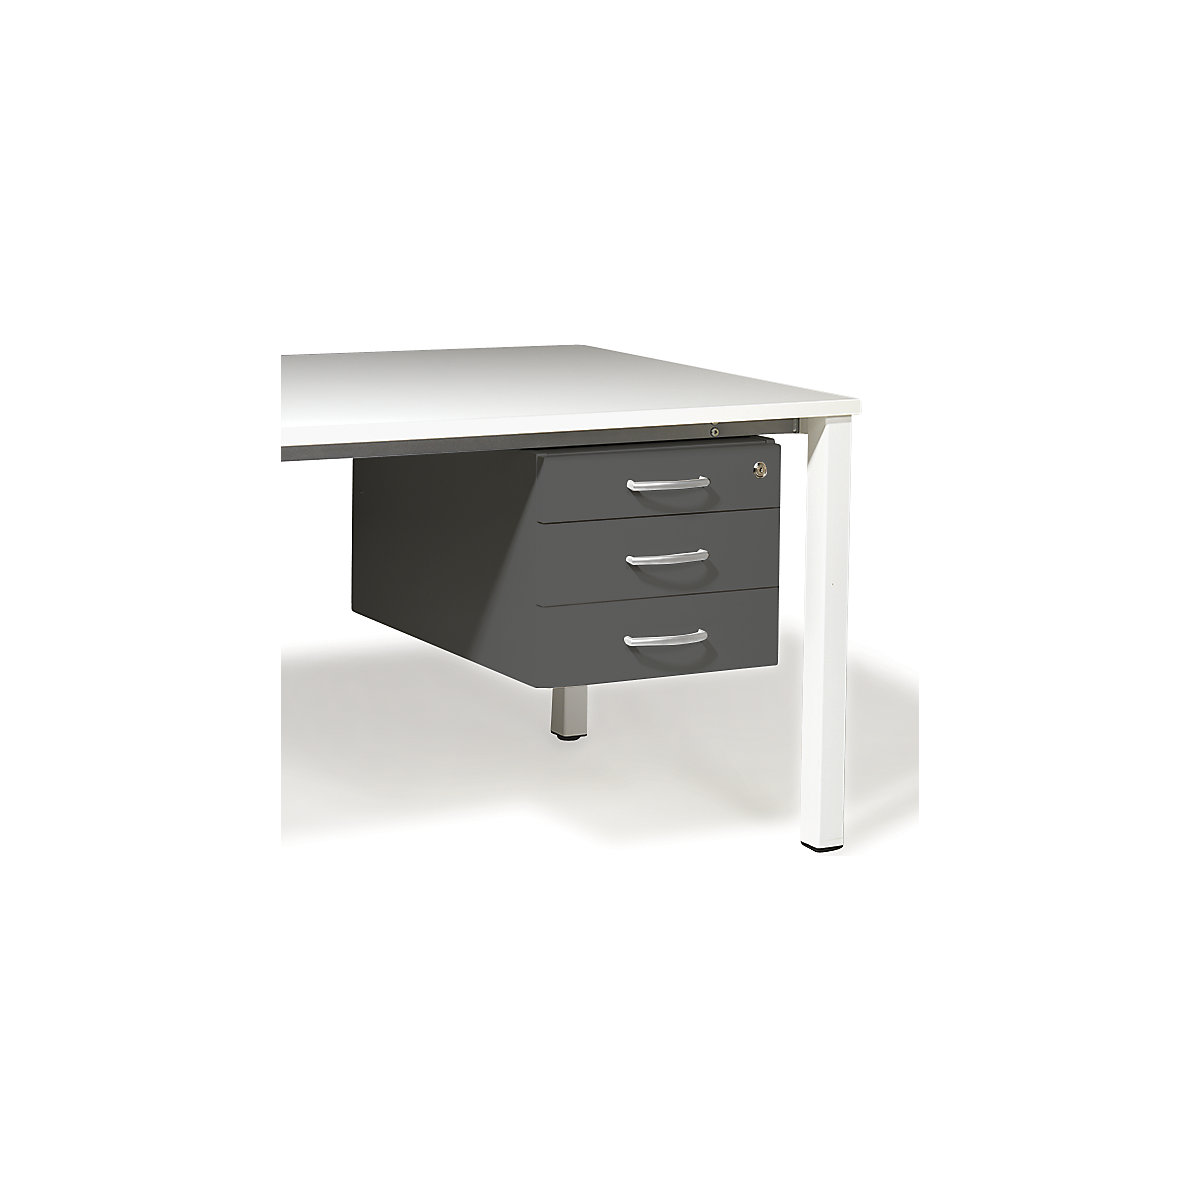 Base cupboard for Desk Duo, WxD 428 x 600 mm, dark grey-1